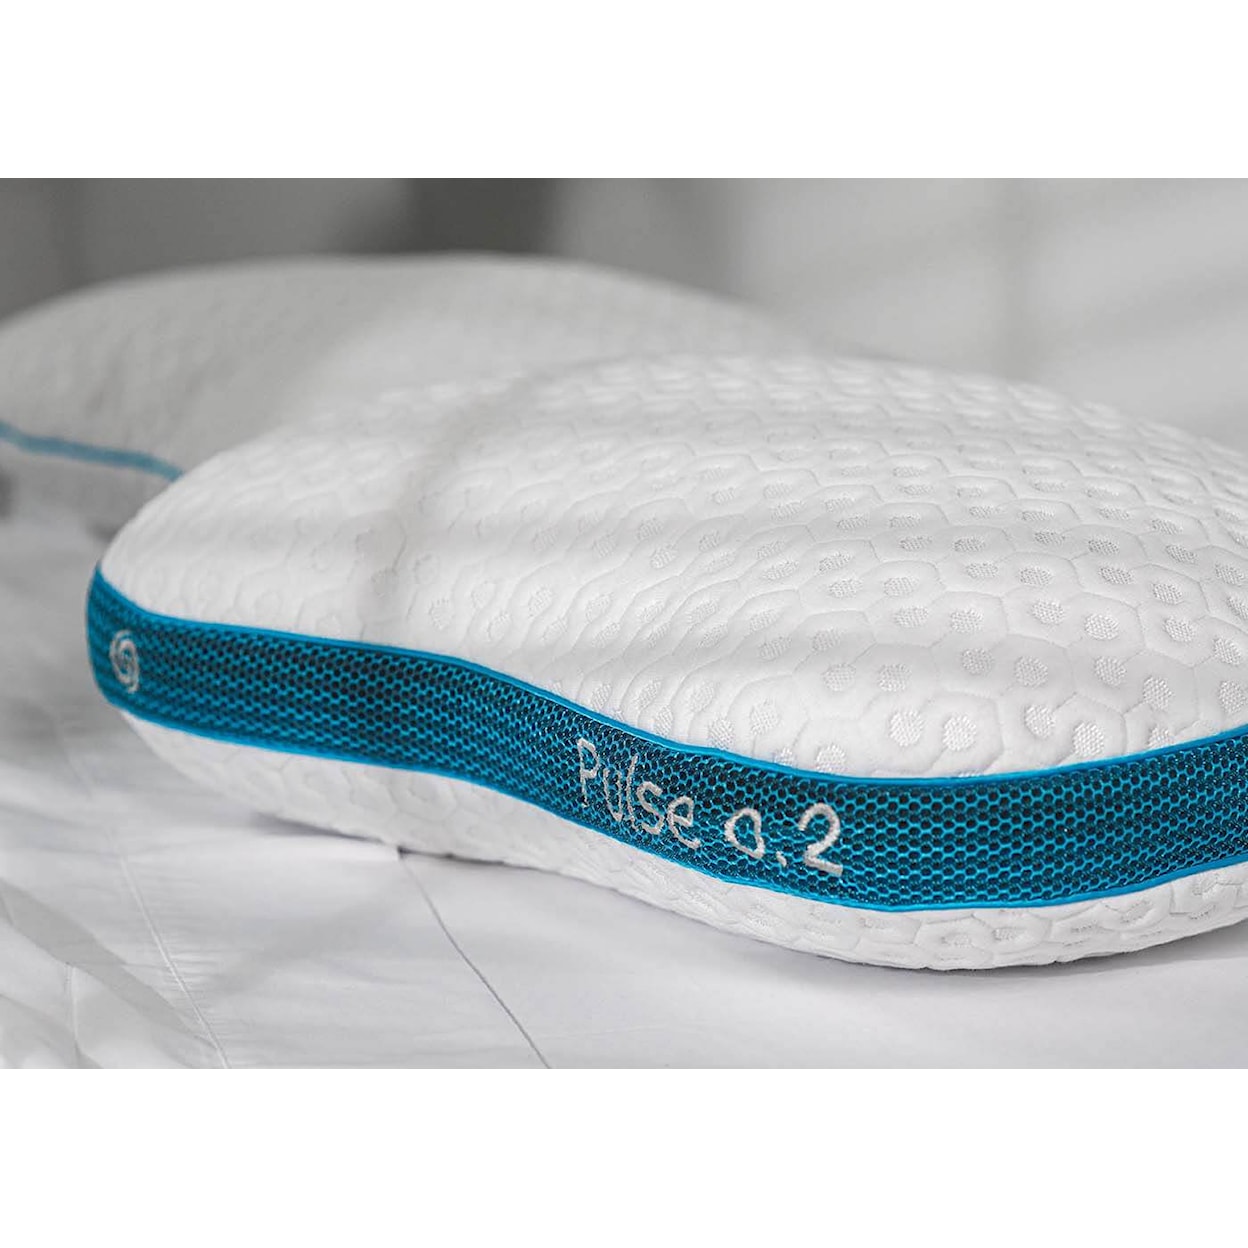 Bedgear Pulse Perfomance Pillow Pulse Performance Pillow - 0.2